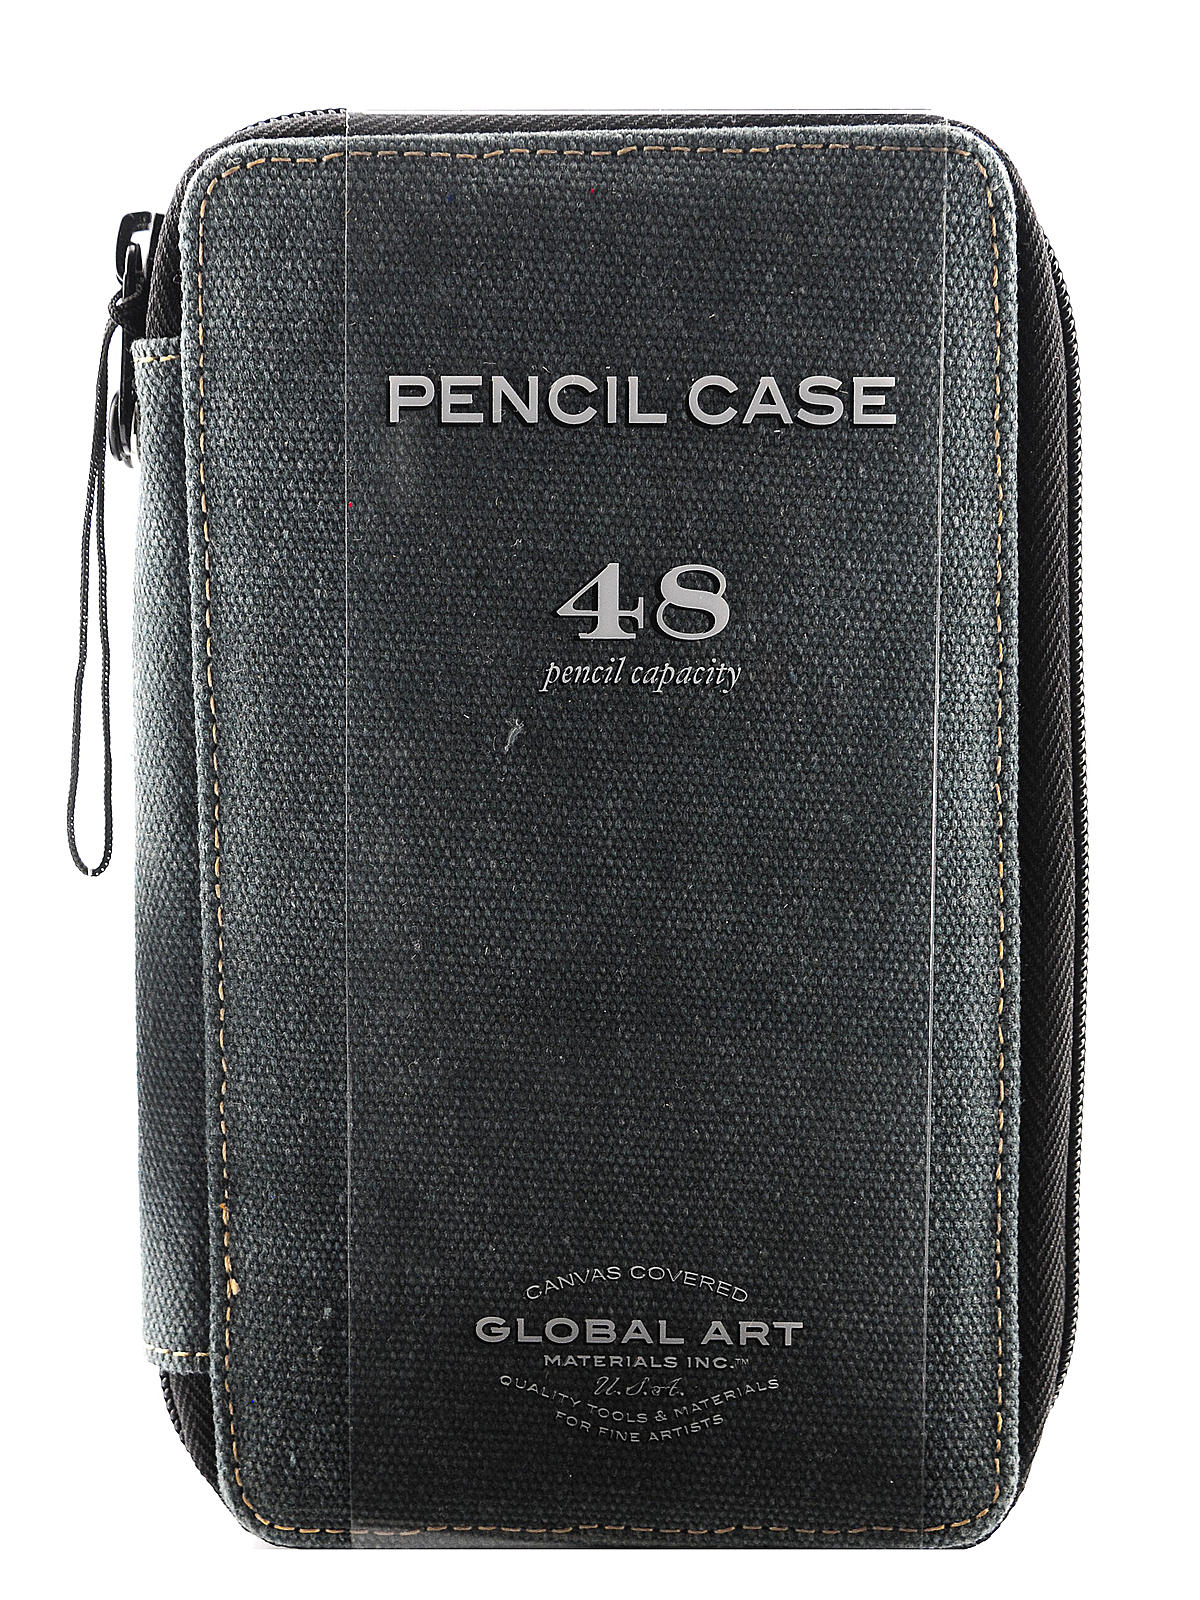 Canvas Pencil Cases Steel Blue Holds 48 Pencils